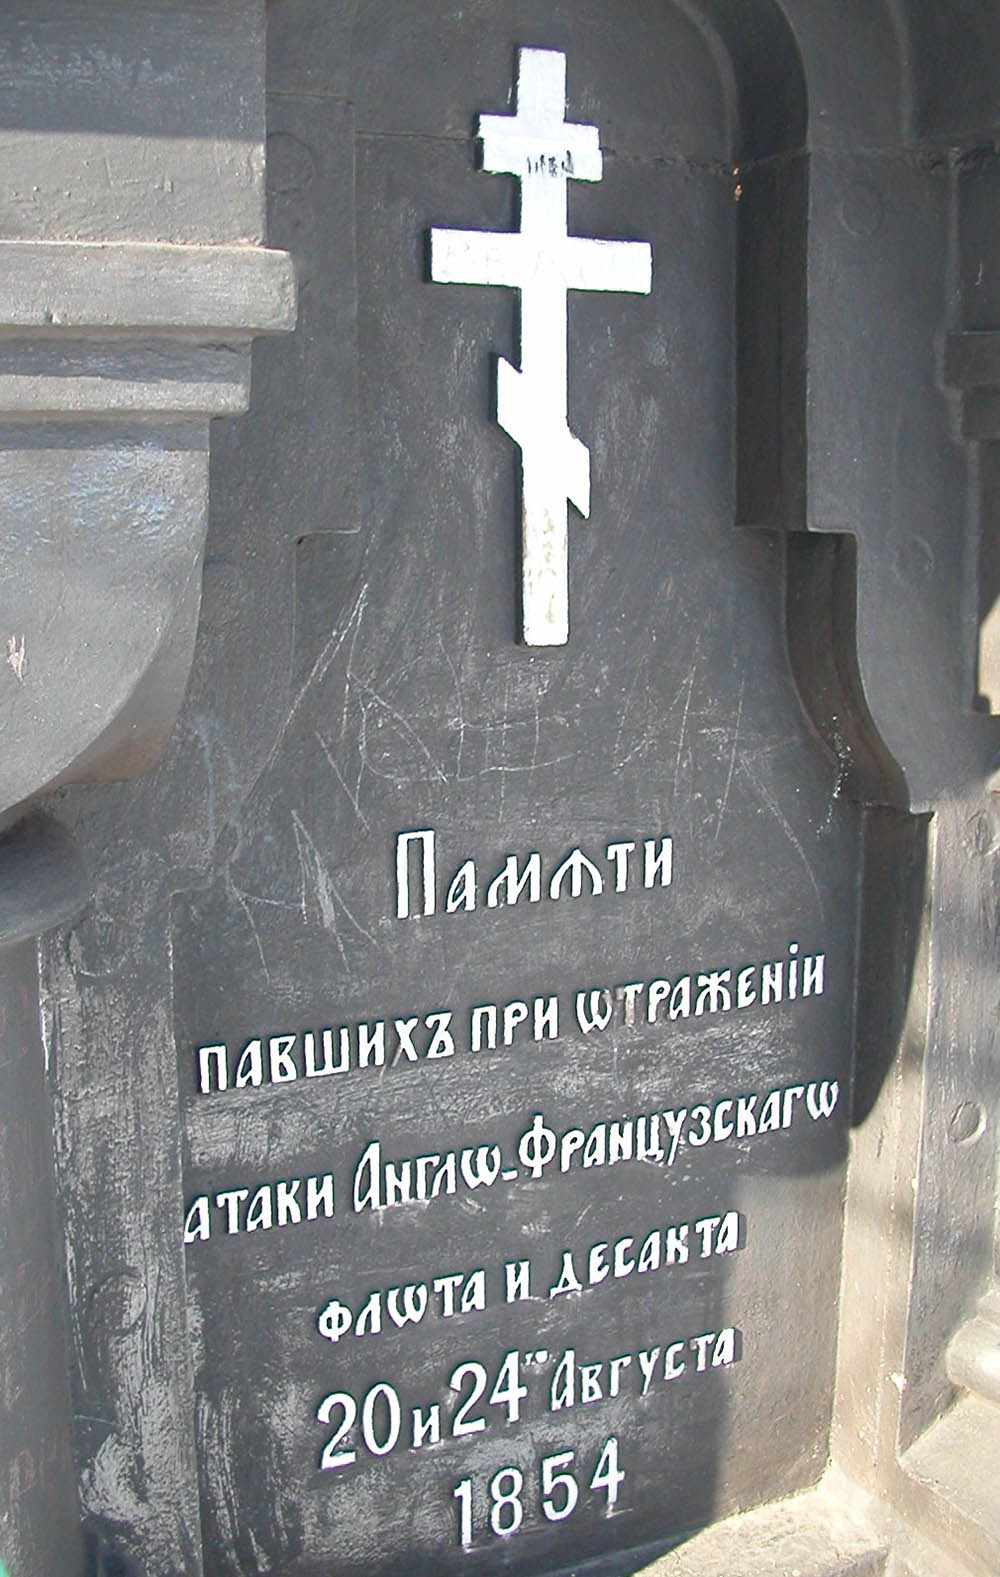 Memorial Siege of Petropavlovsk-Kamchatsky